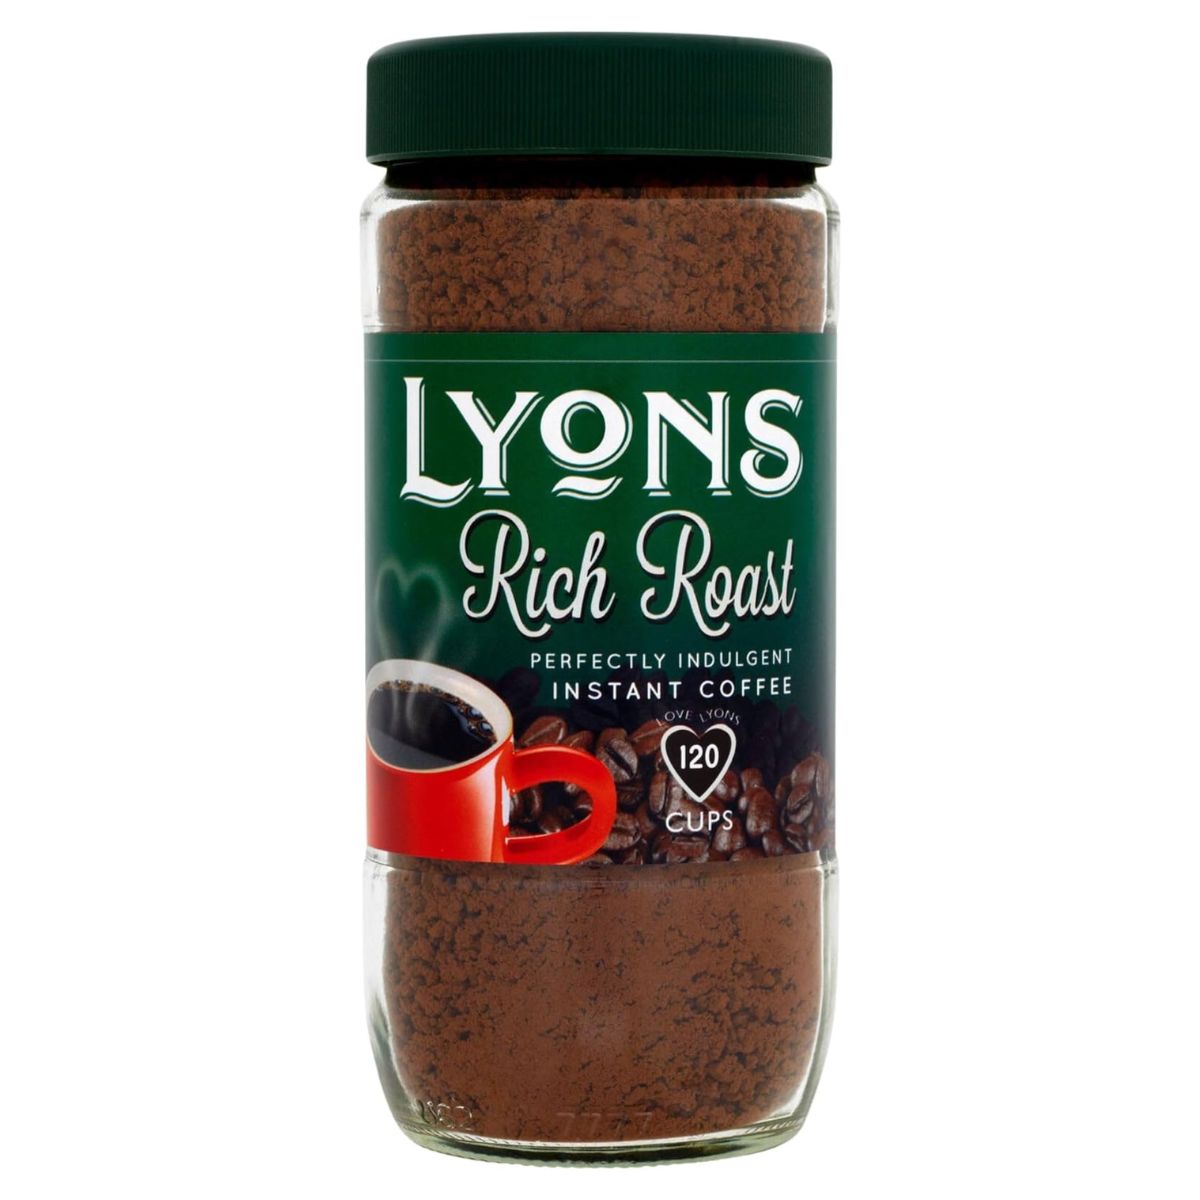 Lyons - Rich Roast Instant Coffee - 90g in a jar.